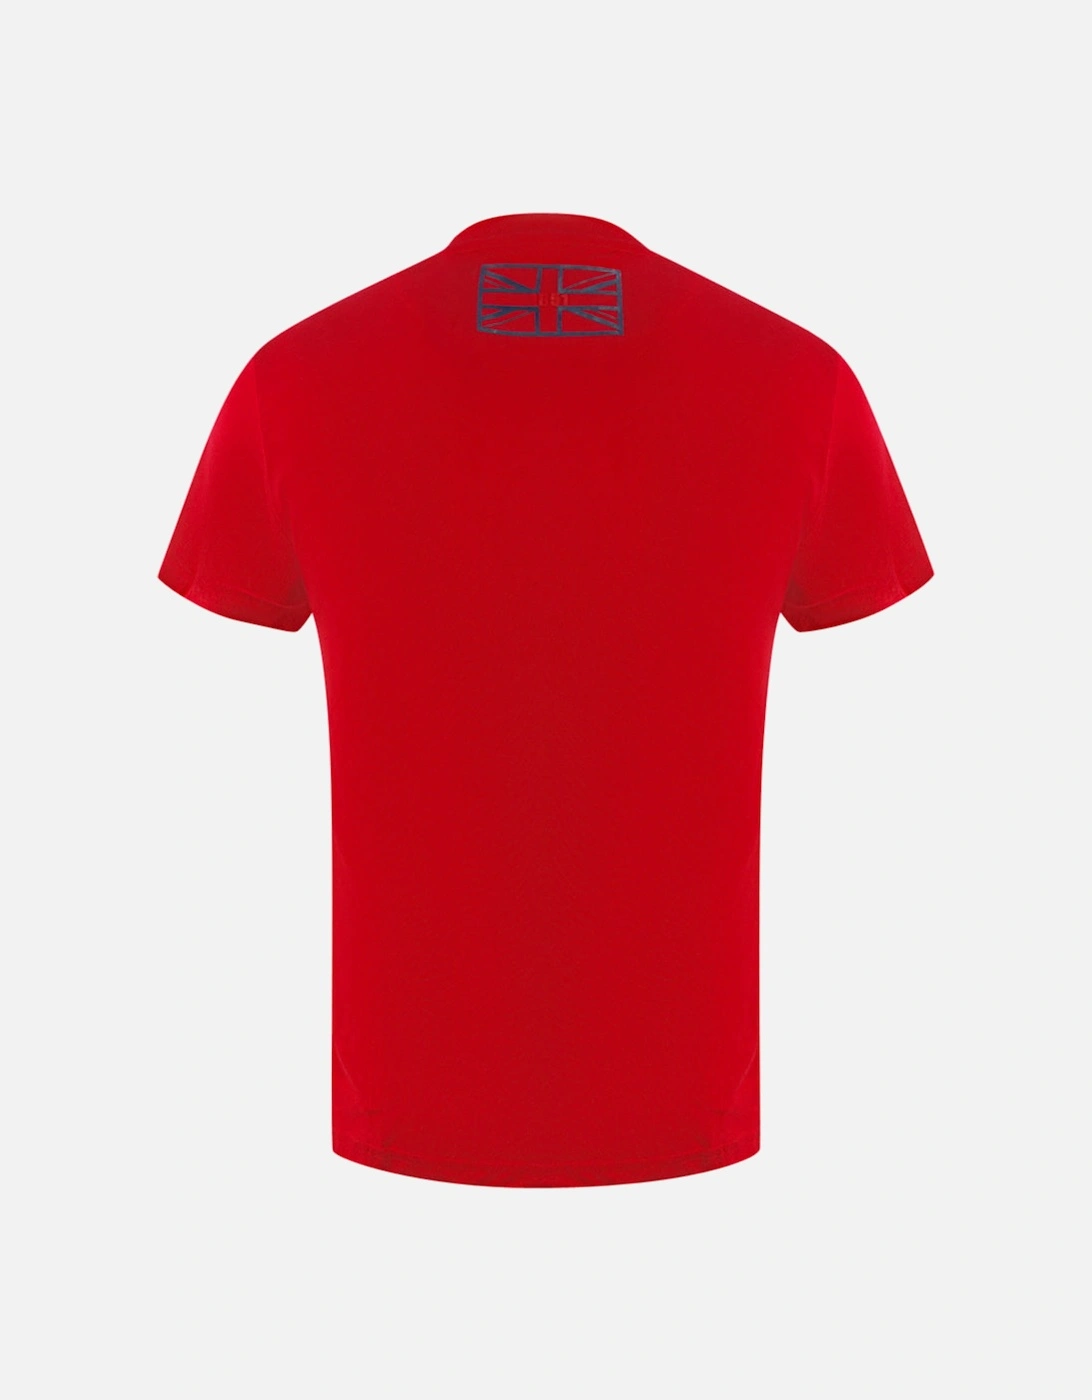 London 1851 Tape Logo Red T-Shirt